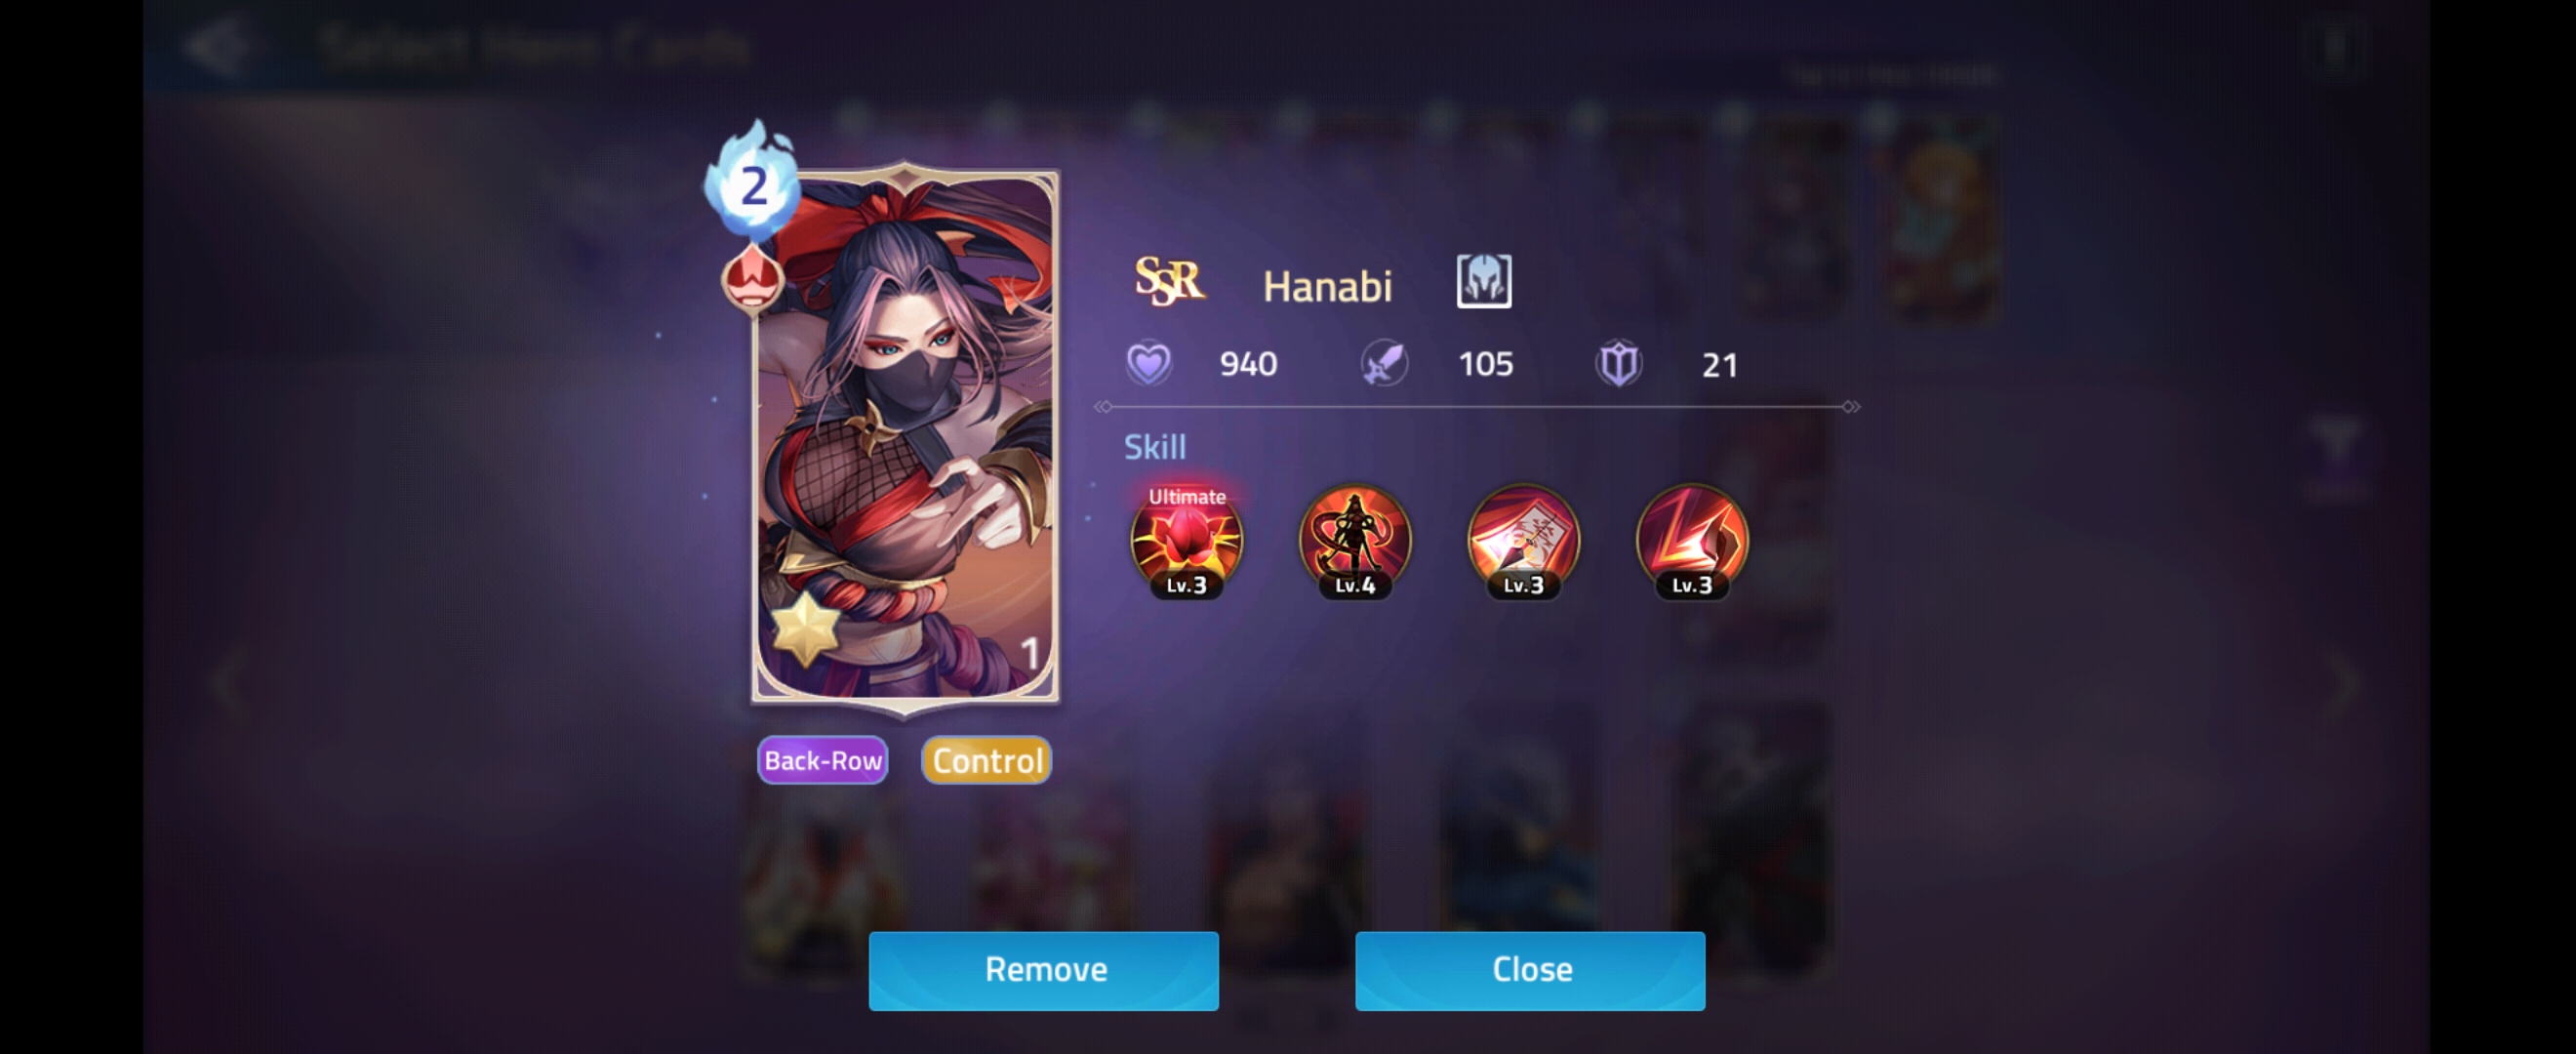 hanabi-mobile-legends-adventure